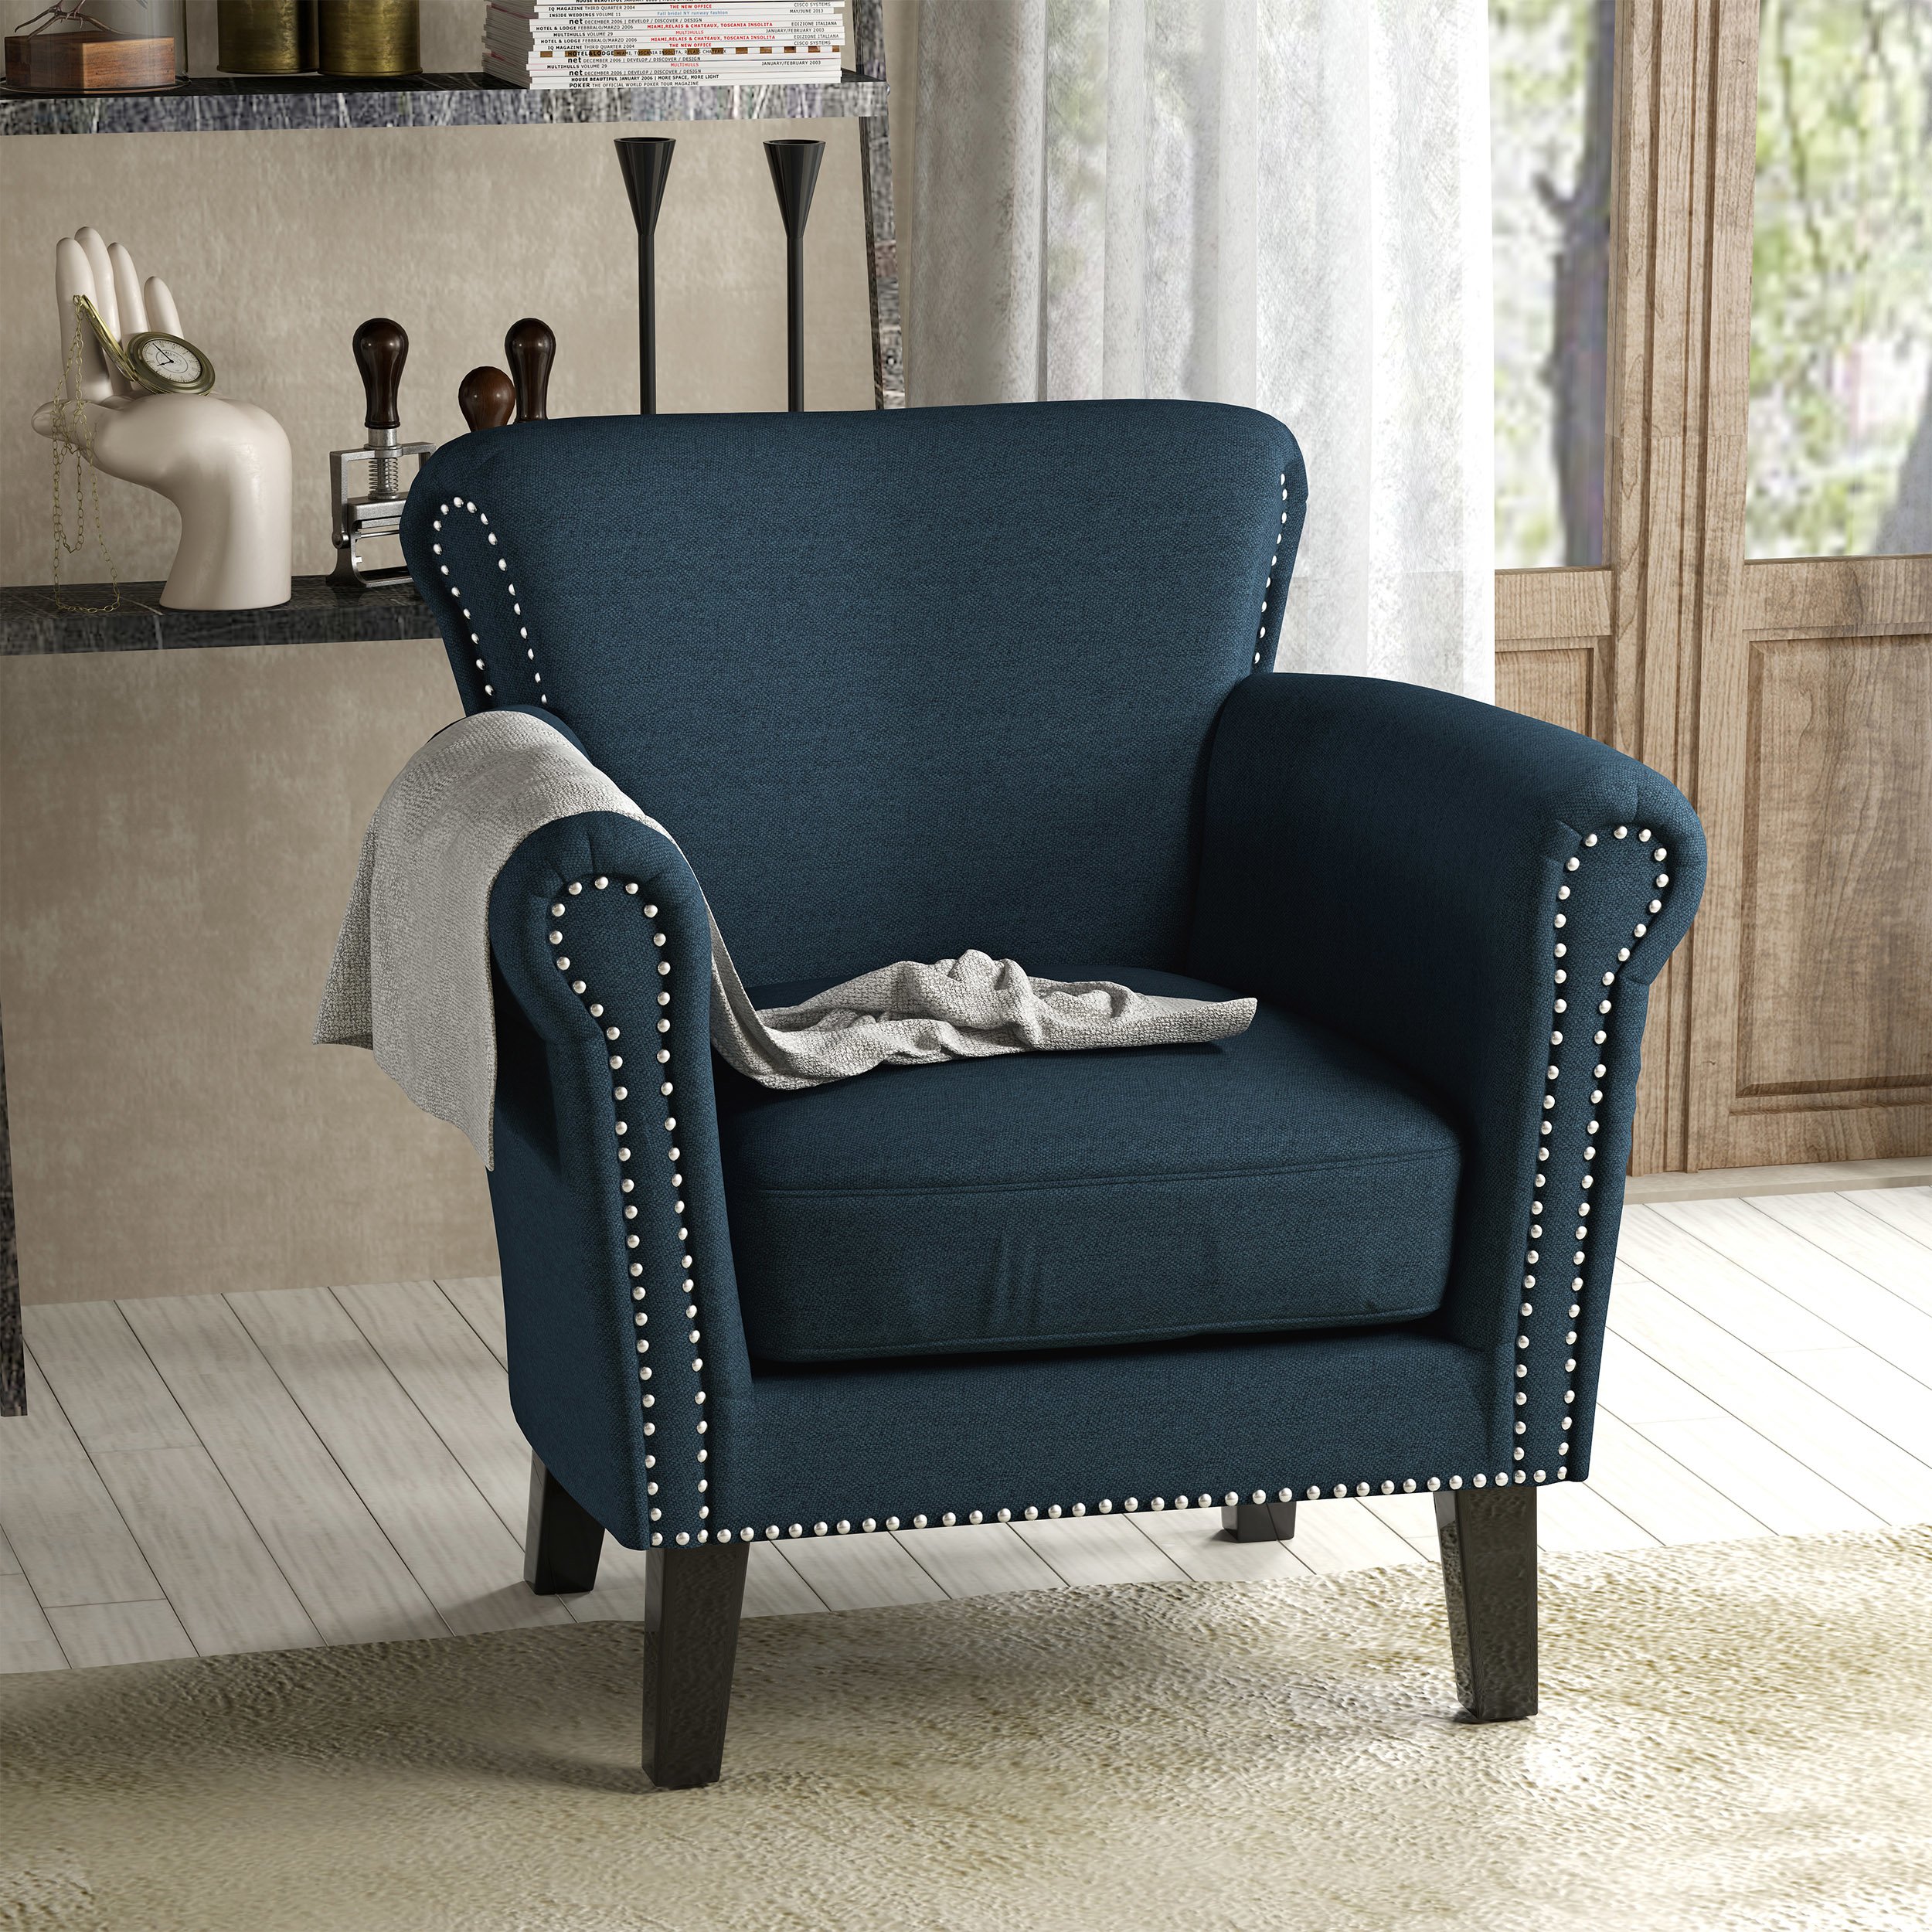 Brently Vintage Scroll Arm Studded Fabric Club Chair - Navy Blue